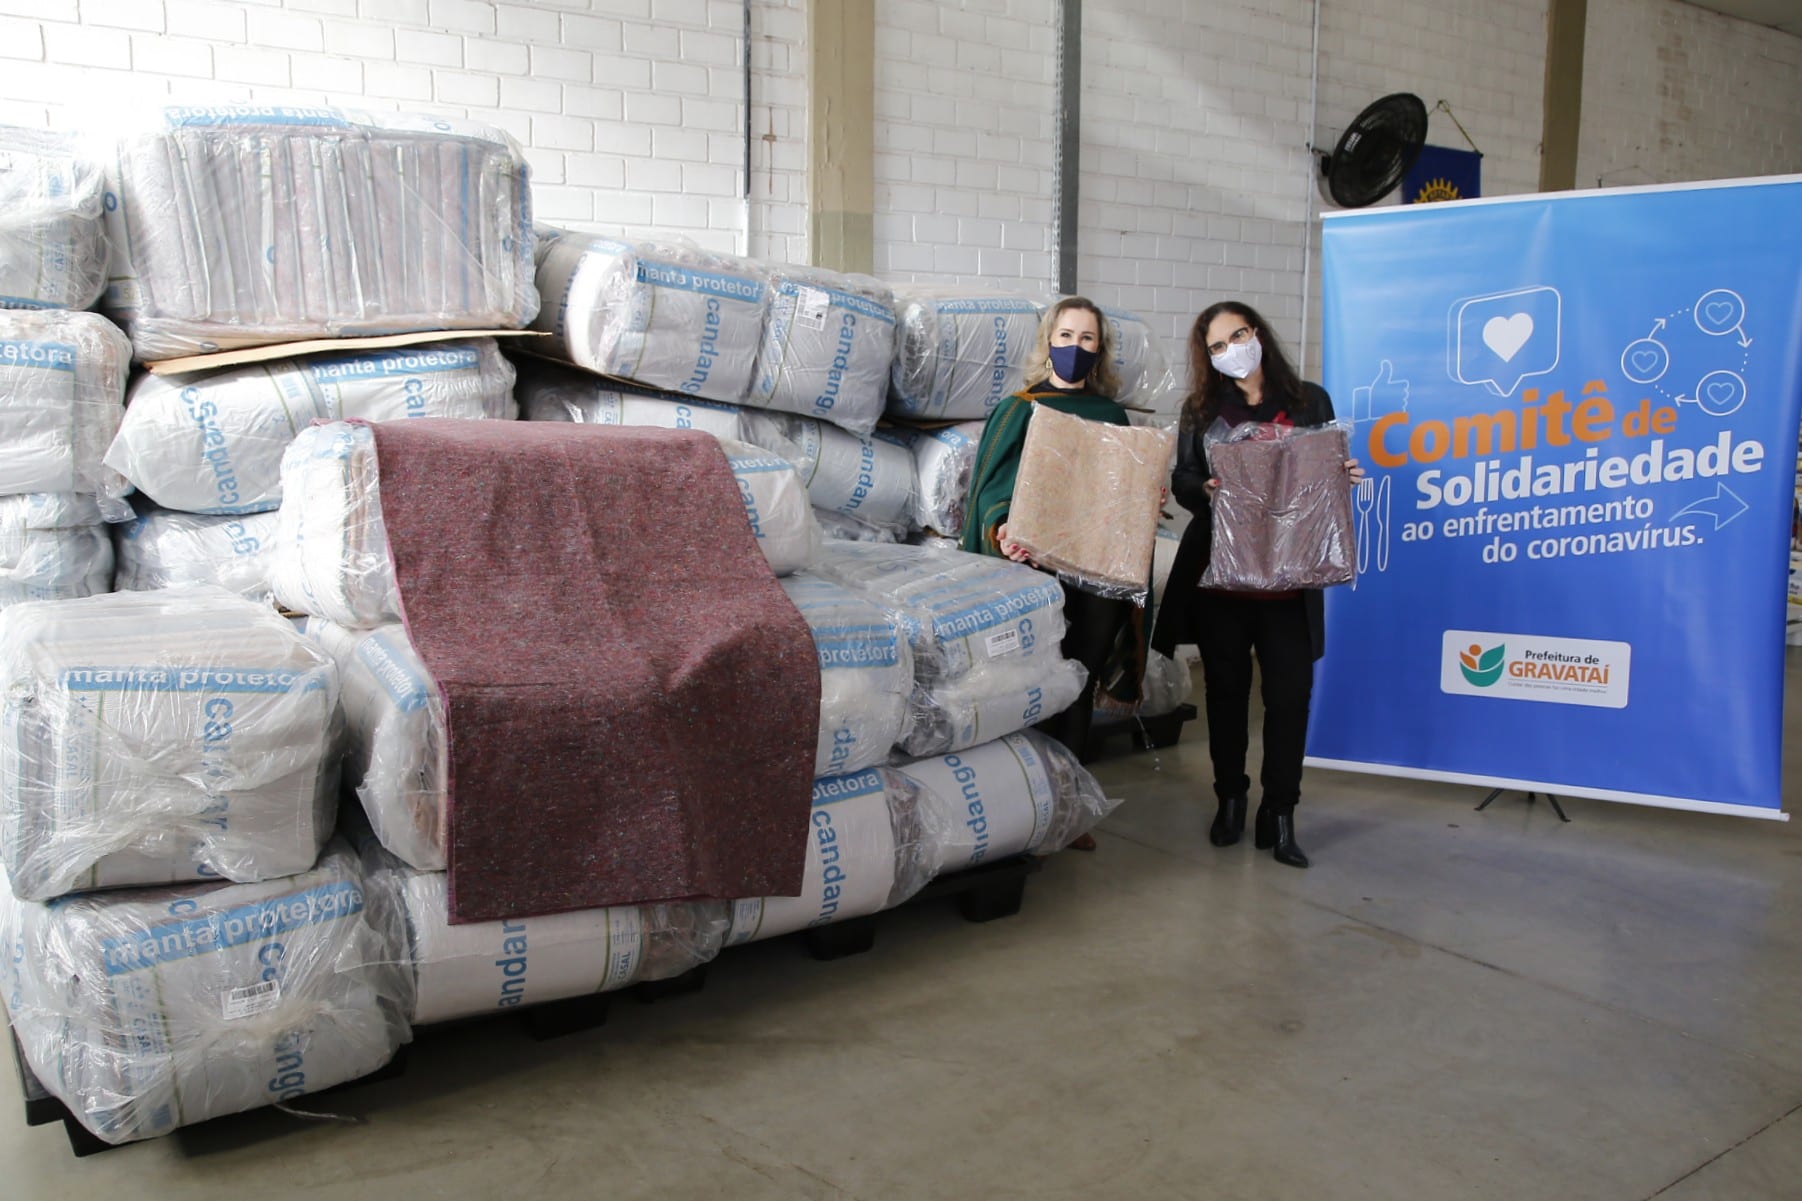 General Motors doa 900 cobertores para a Campanha do Agasalho de Gravataí